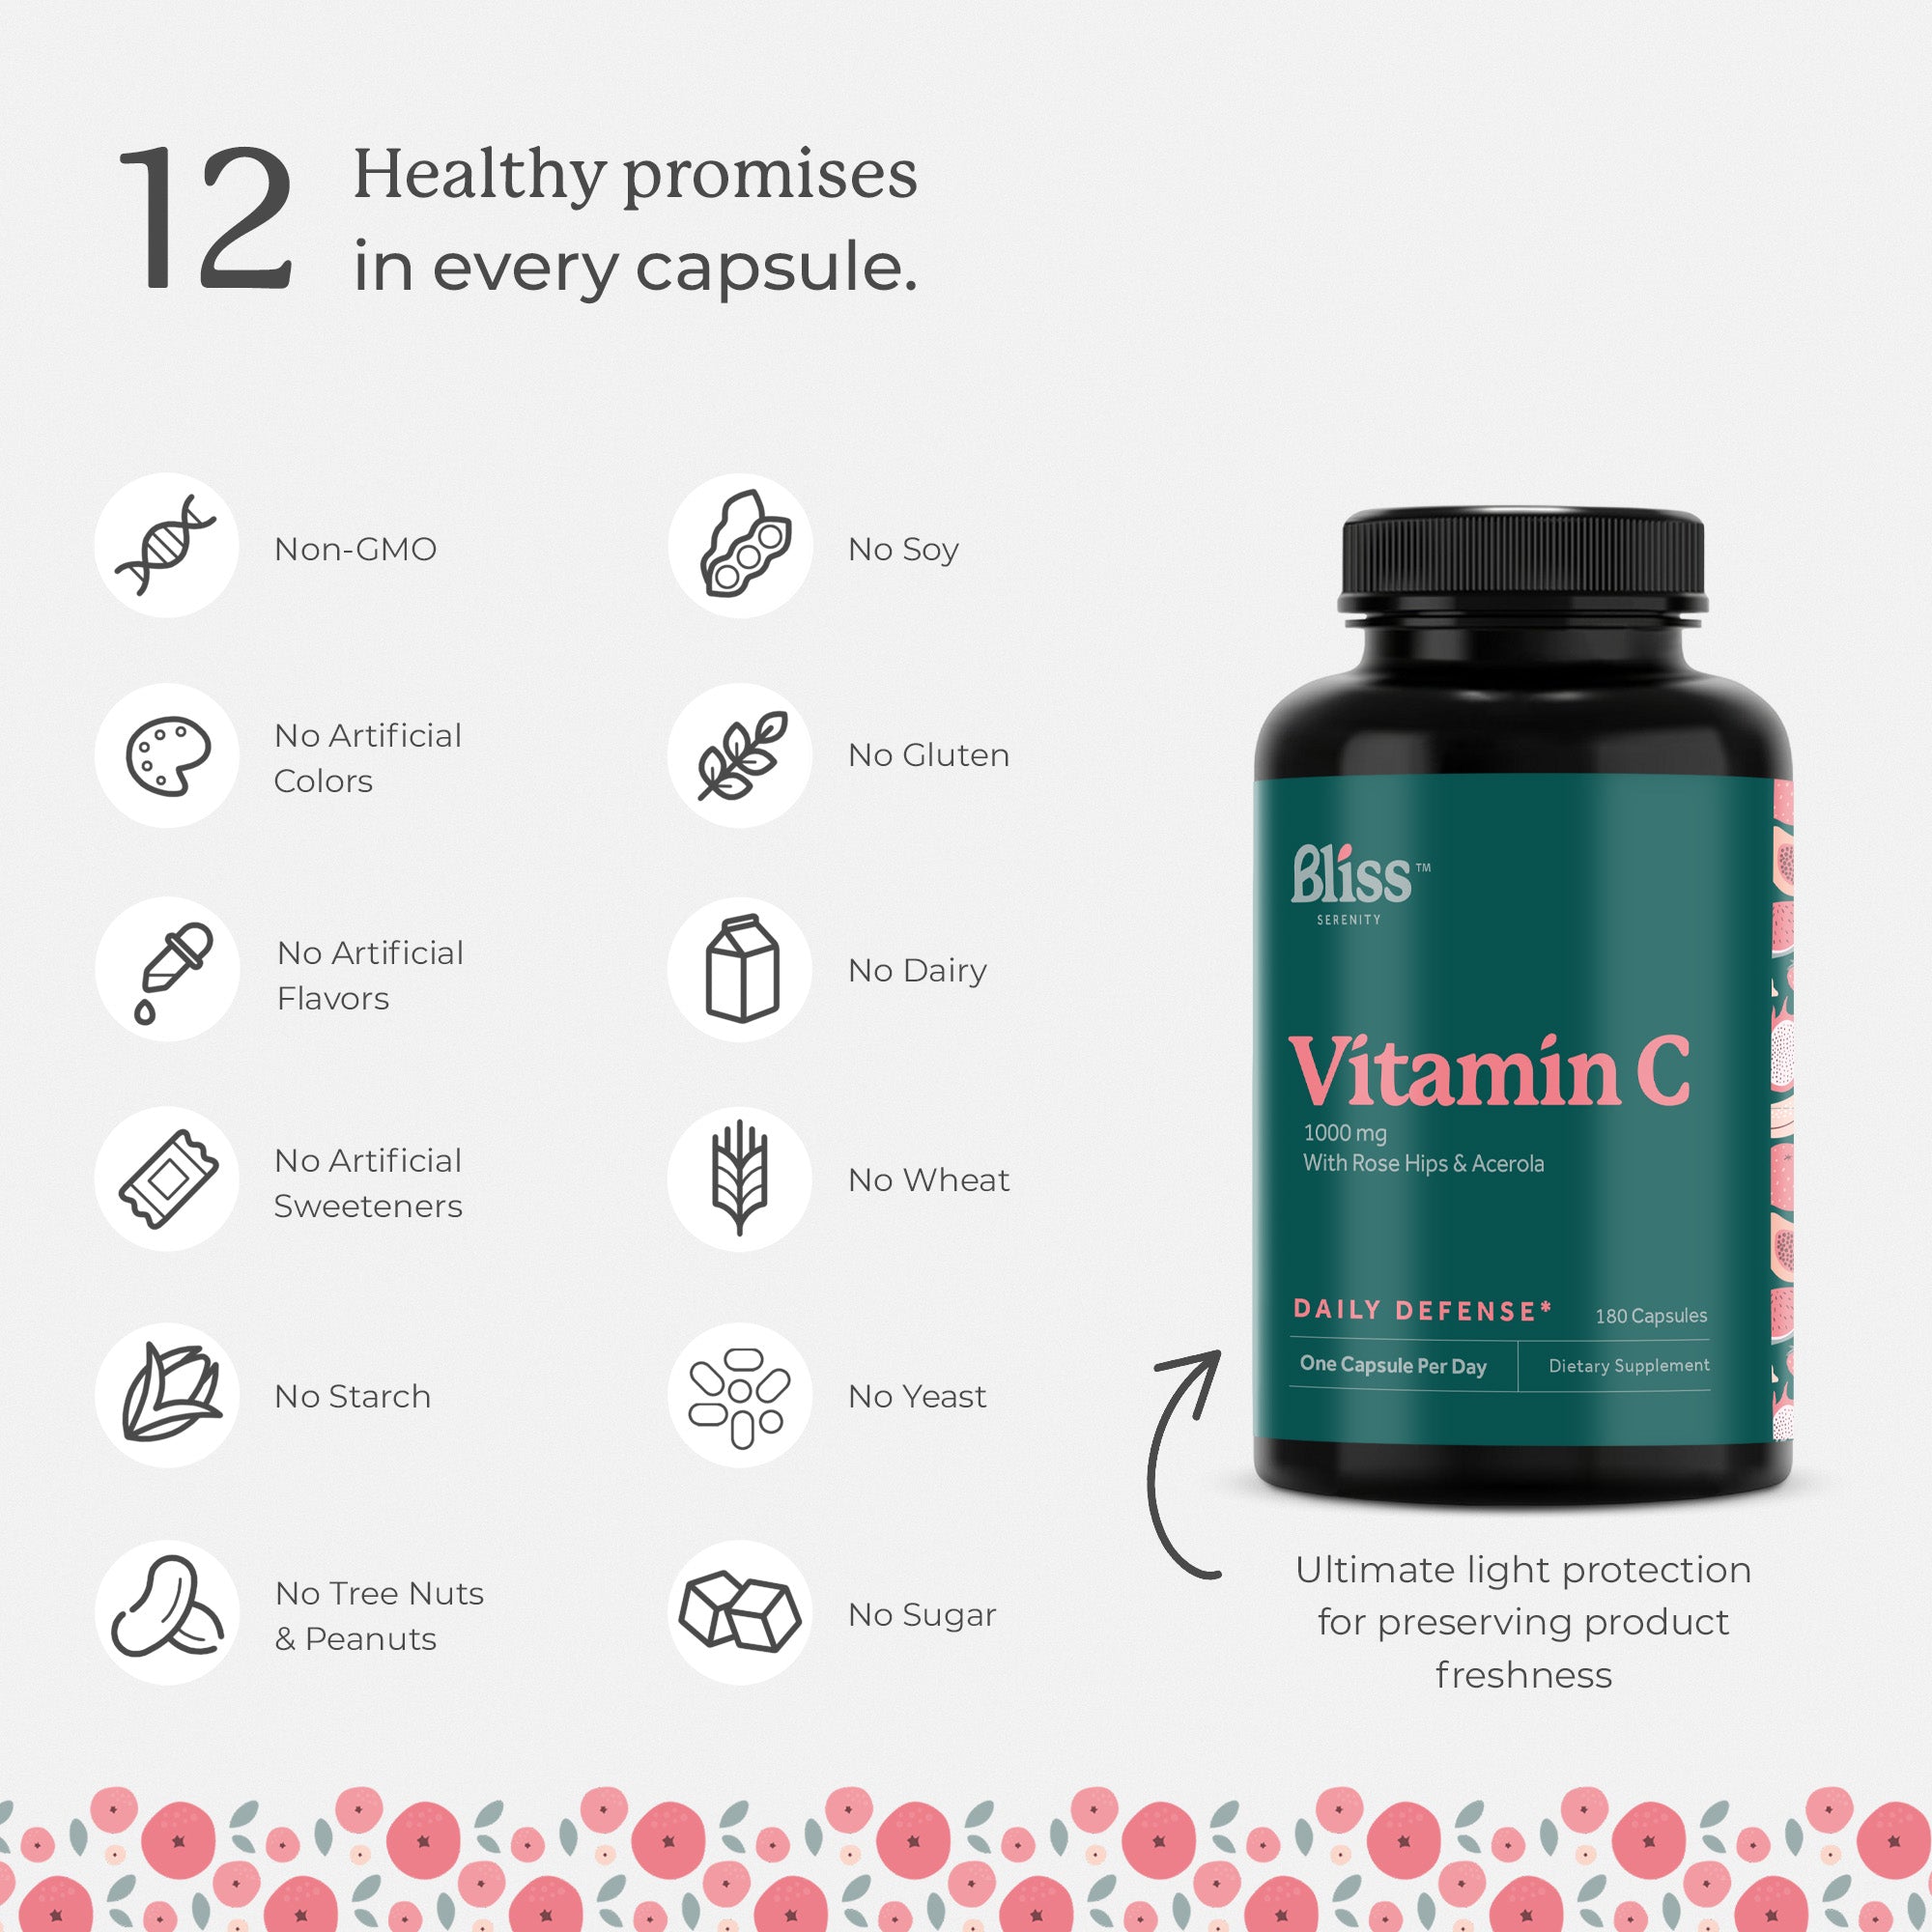 Bliss Serenity Vitamin C 1000mg - 180 Capsules